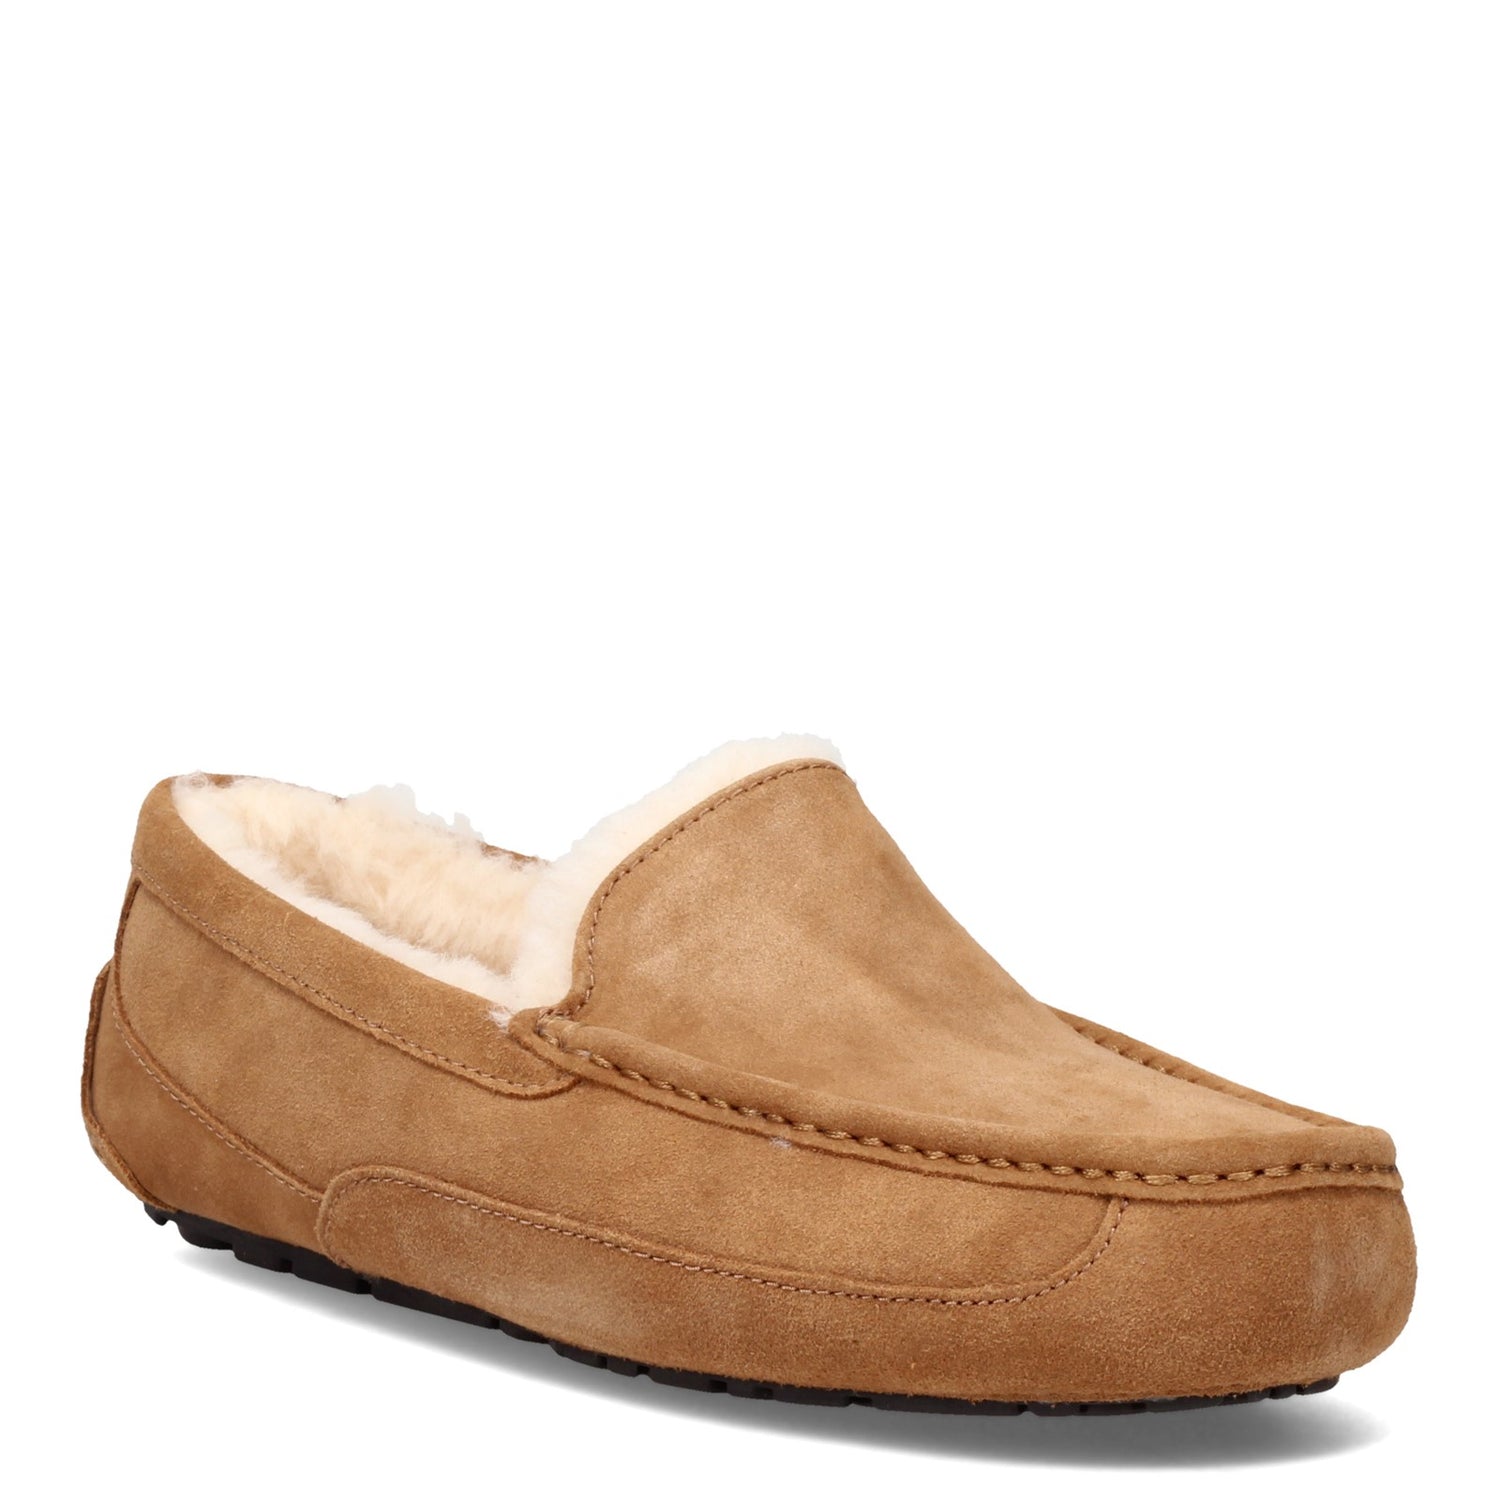 Peltz Shoes  Men's Ugg Ascot Slipper - Wide Width Chestnut 1101110W-CHE